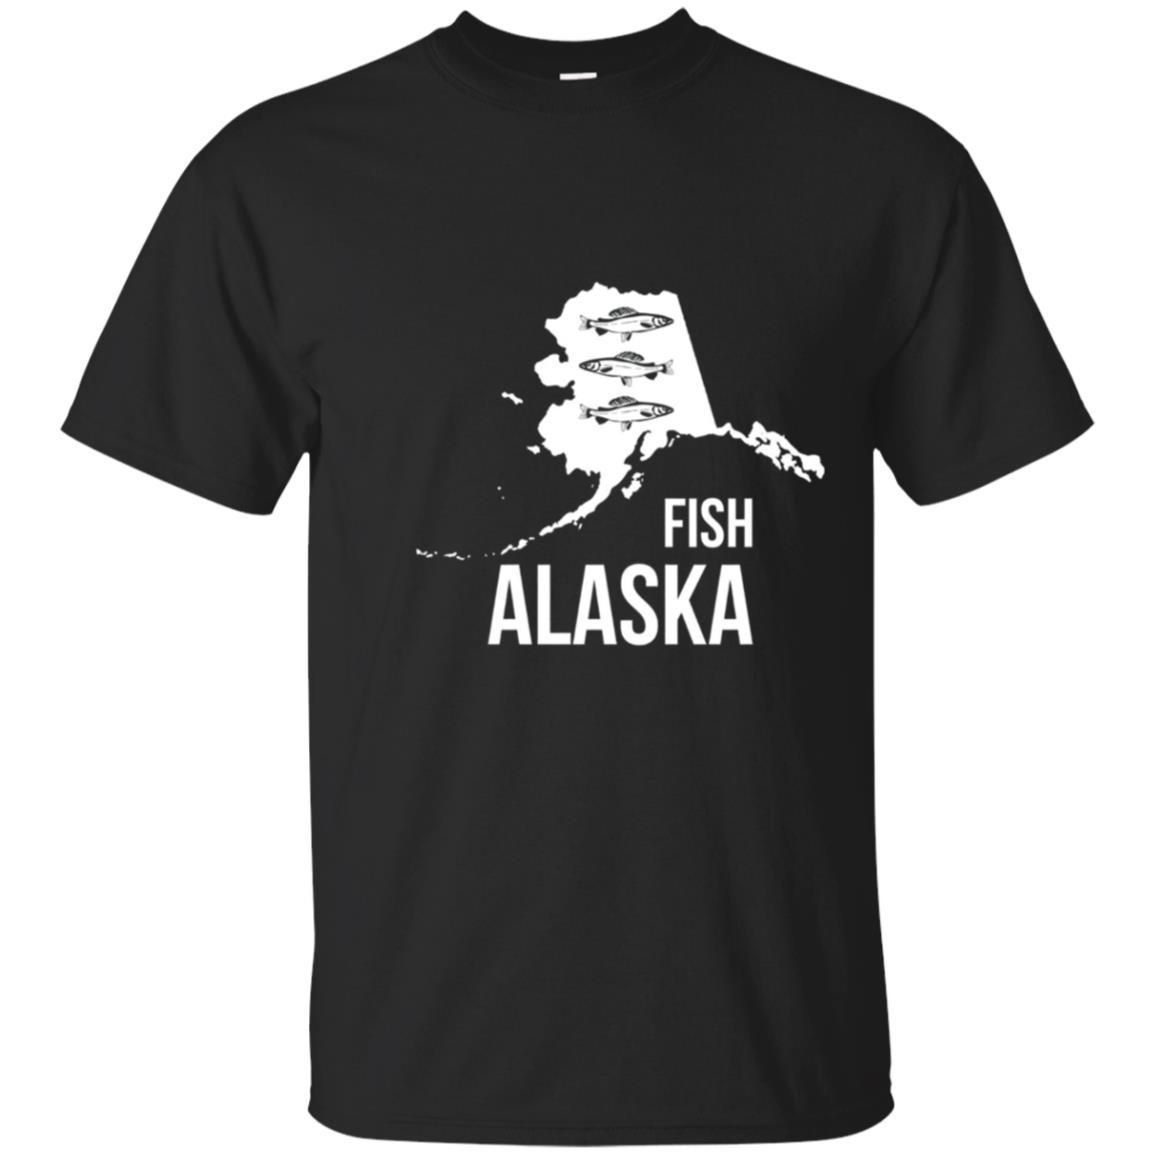 Check Out This Awesome Fish Alaska Fishing Funny Fishing Apparel T Shirt